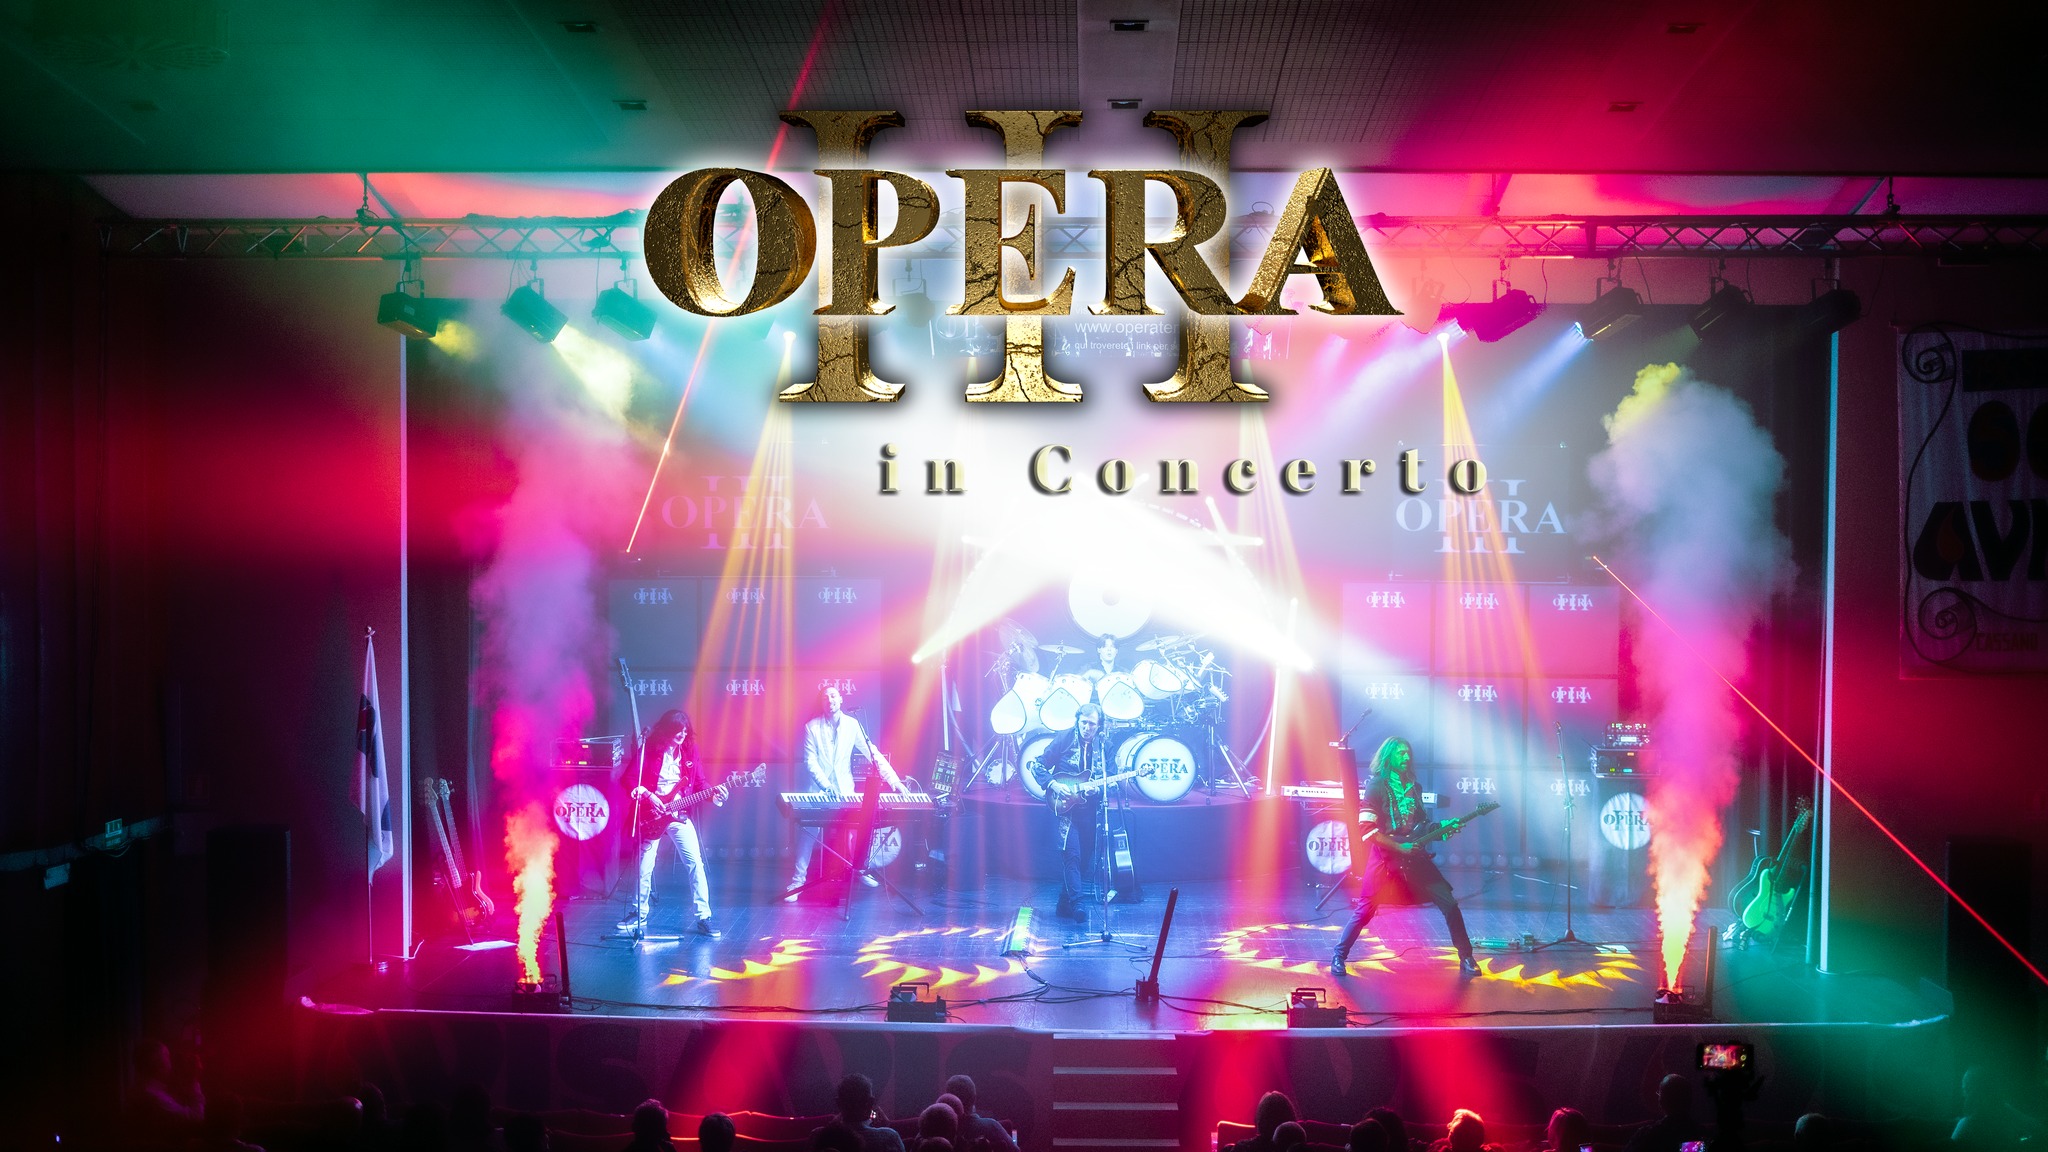 Opera III in Concerto @ Cineteatro San Pio - Uboldo